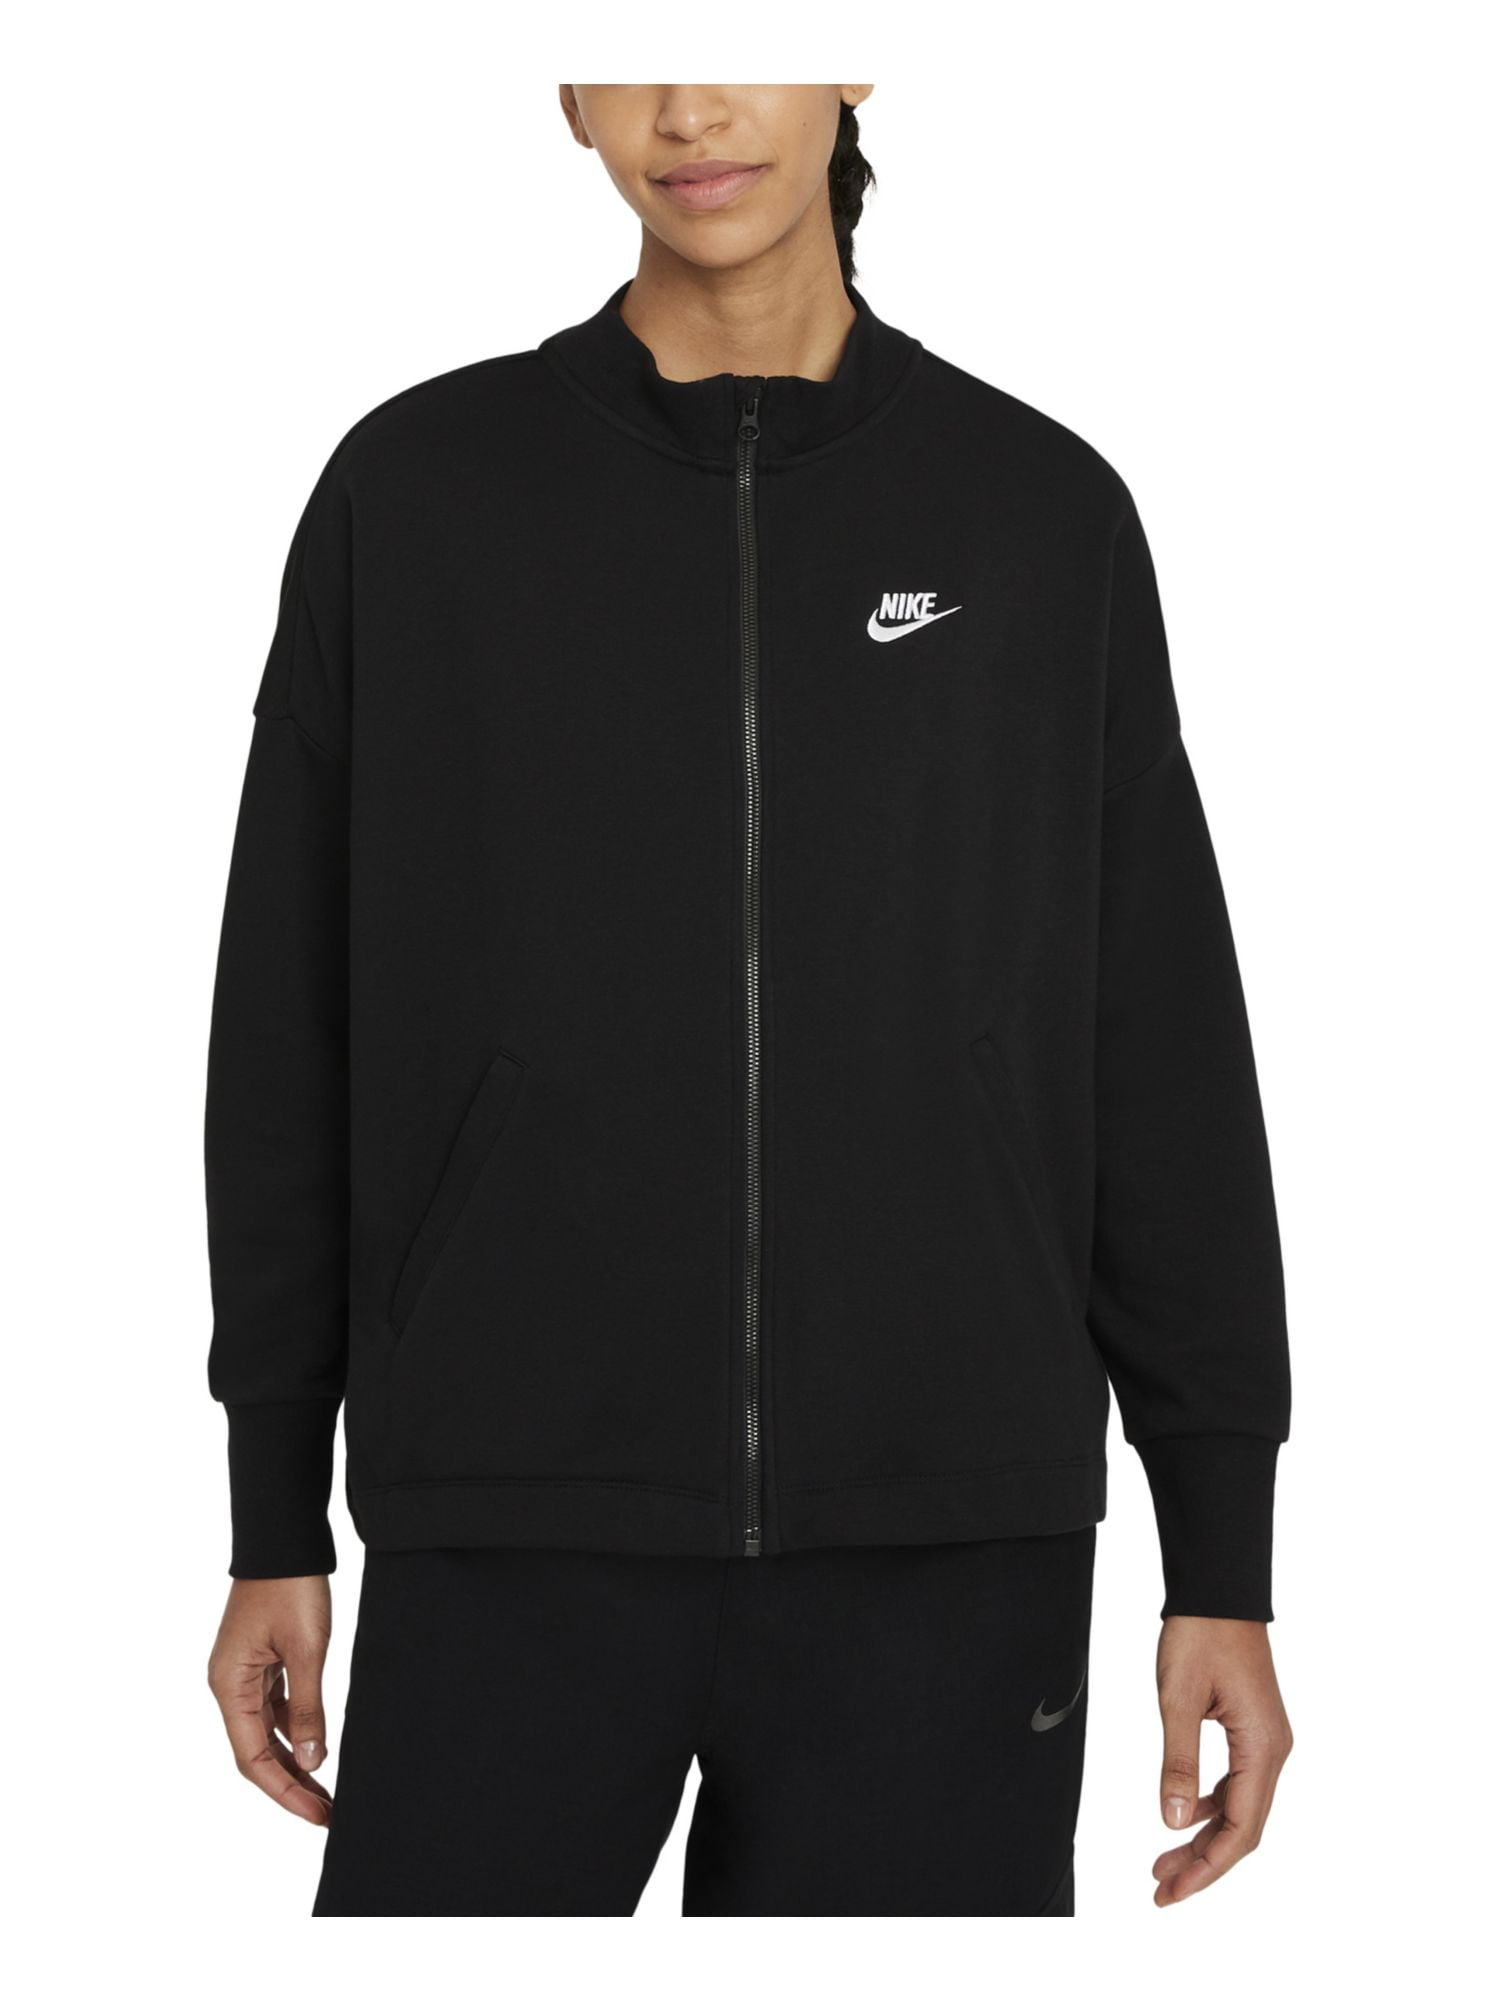 Women's Nike Grey Heather/White Sportswear Essential Jogger (BV4095 063) -  XS 